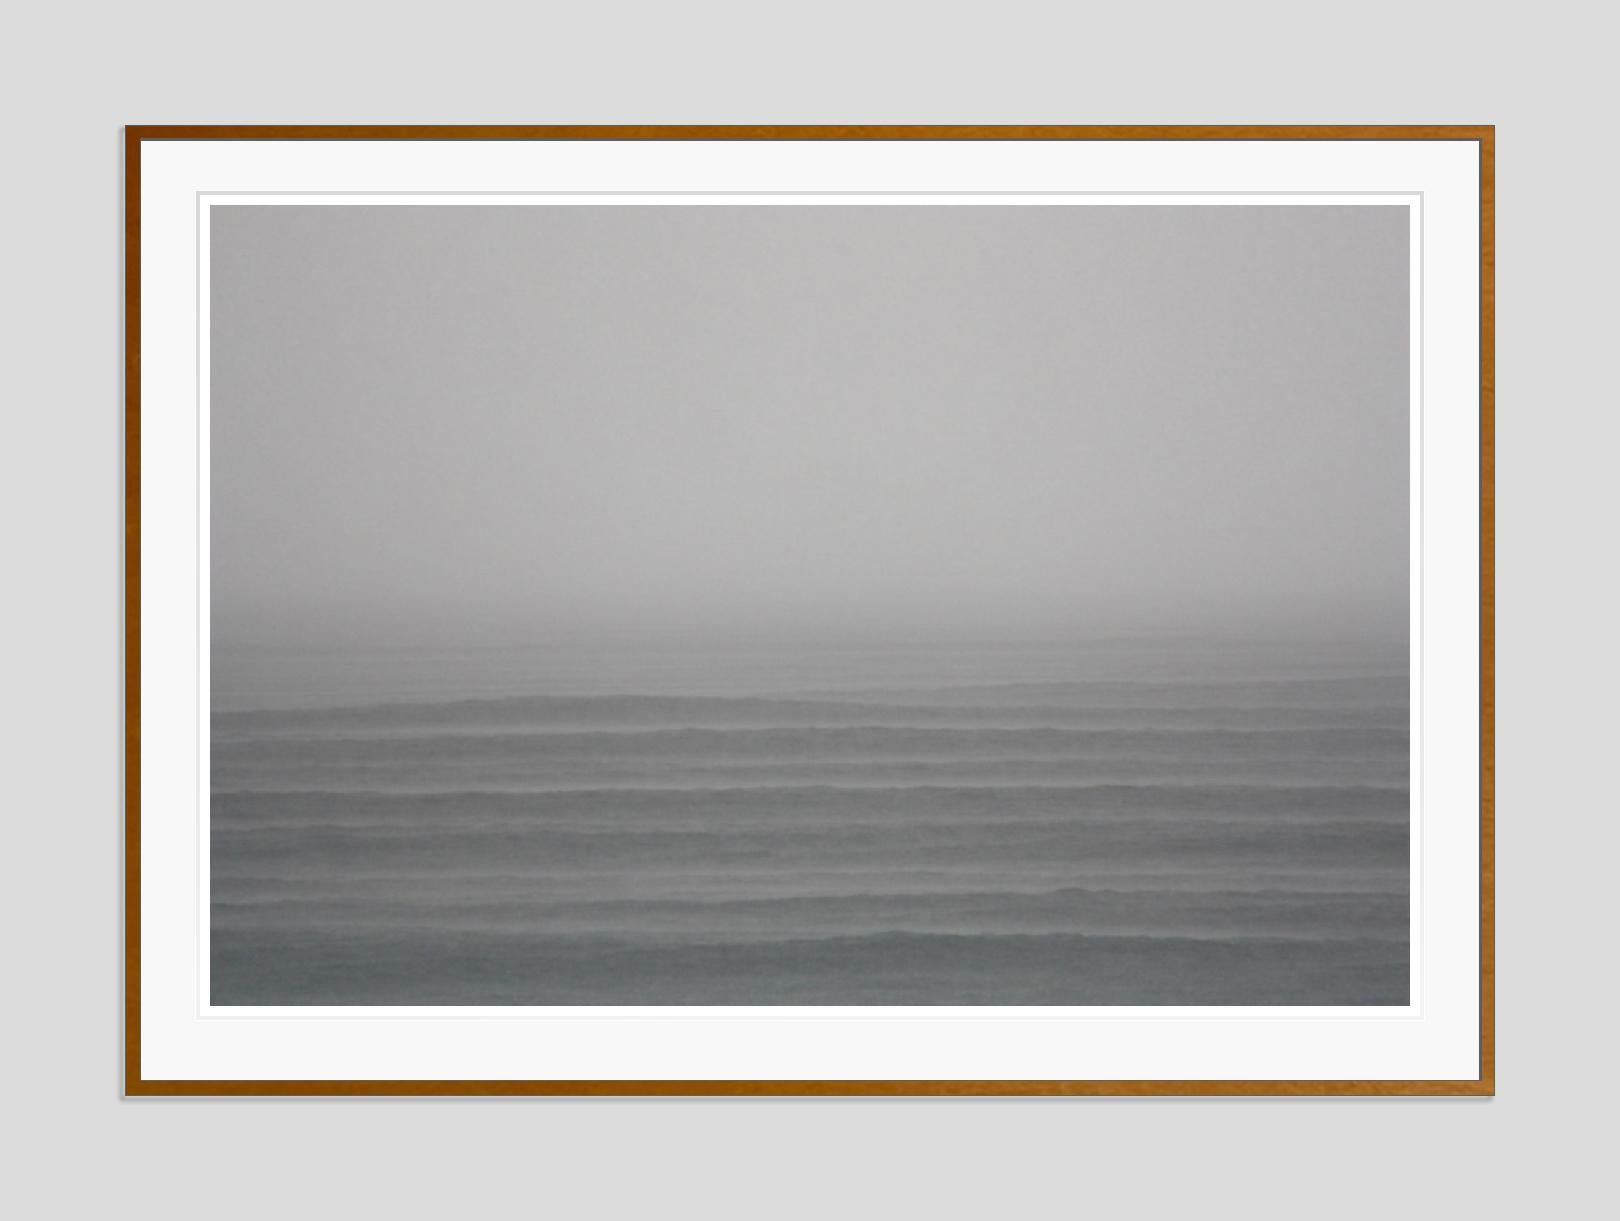 Calm Sea -  Oversize Signed Limited Edition Print  - Modern Photograph by Stuart Möller